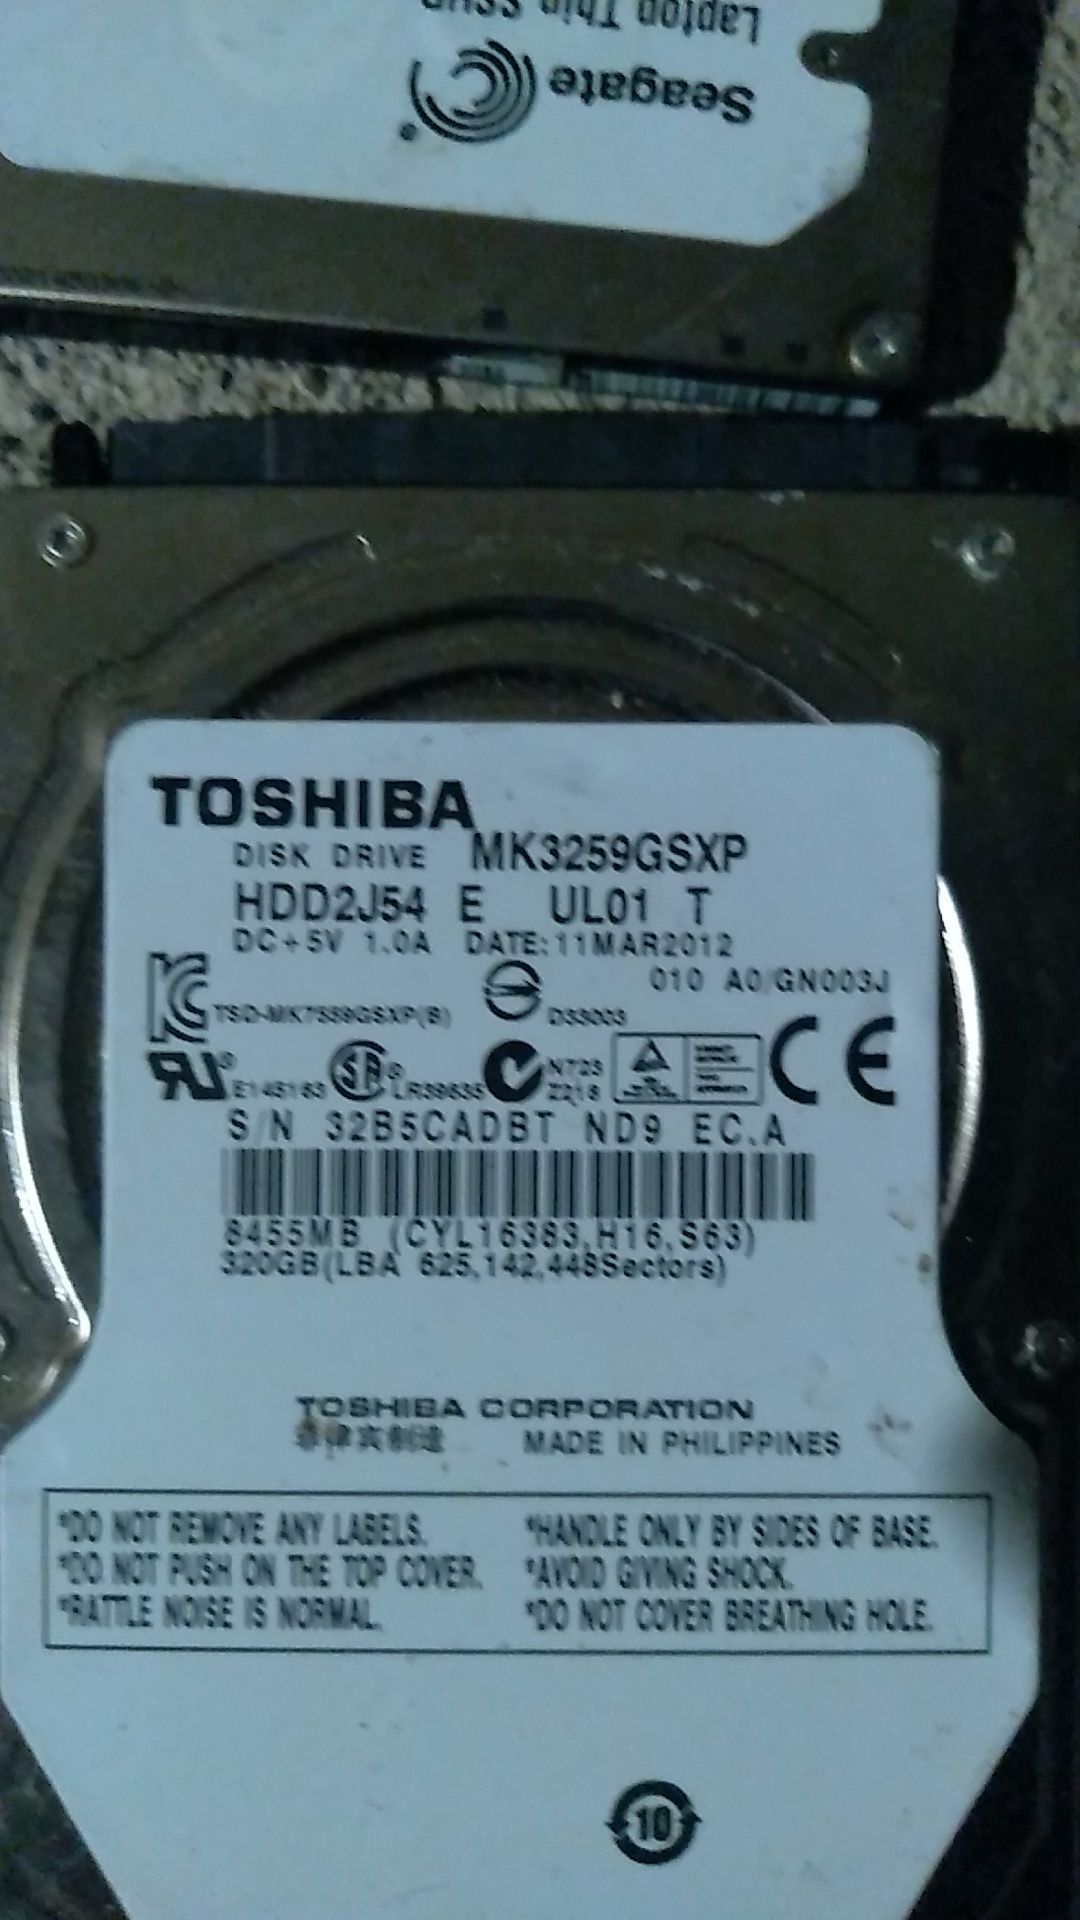 TOSHIBA disk drive